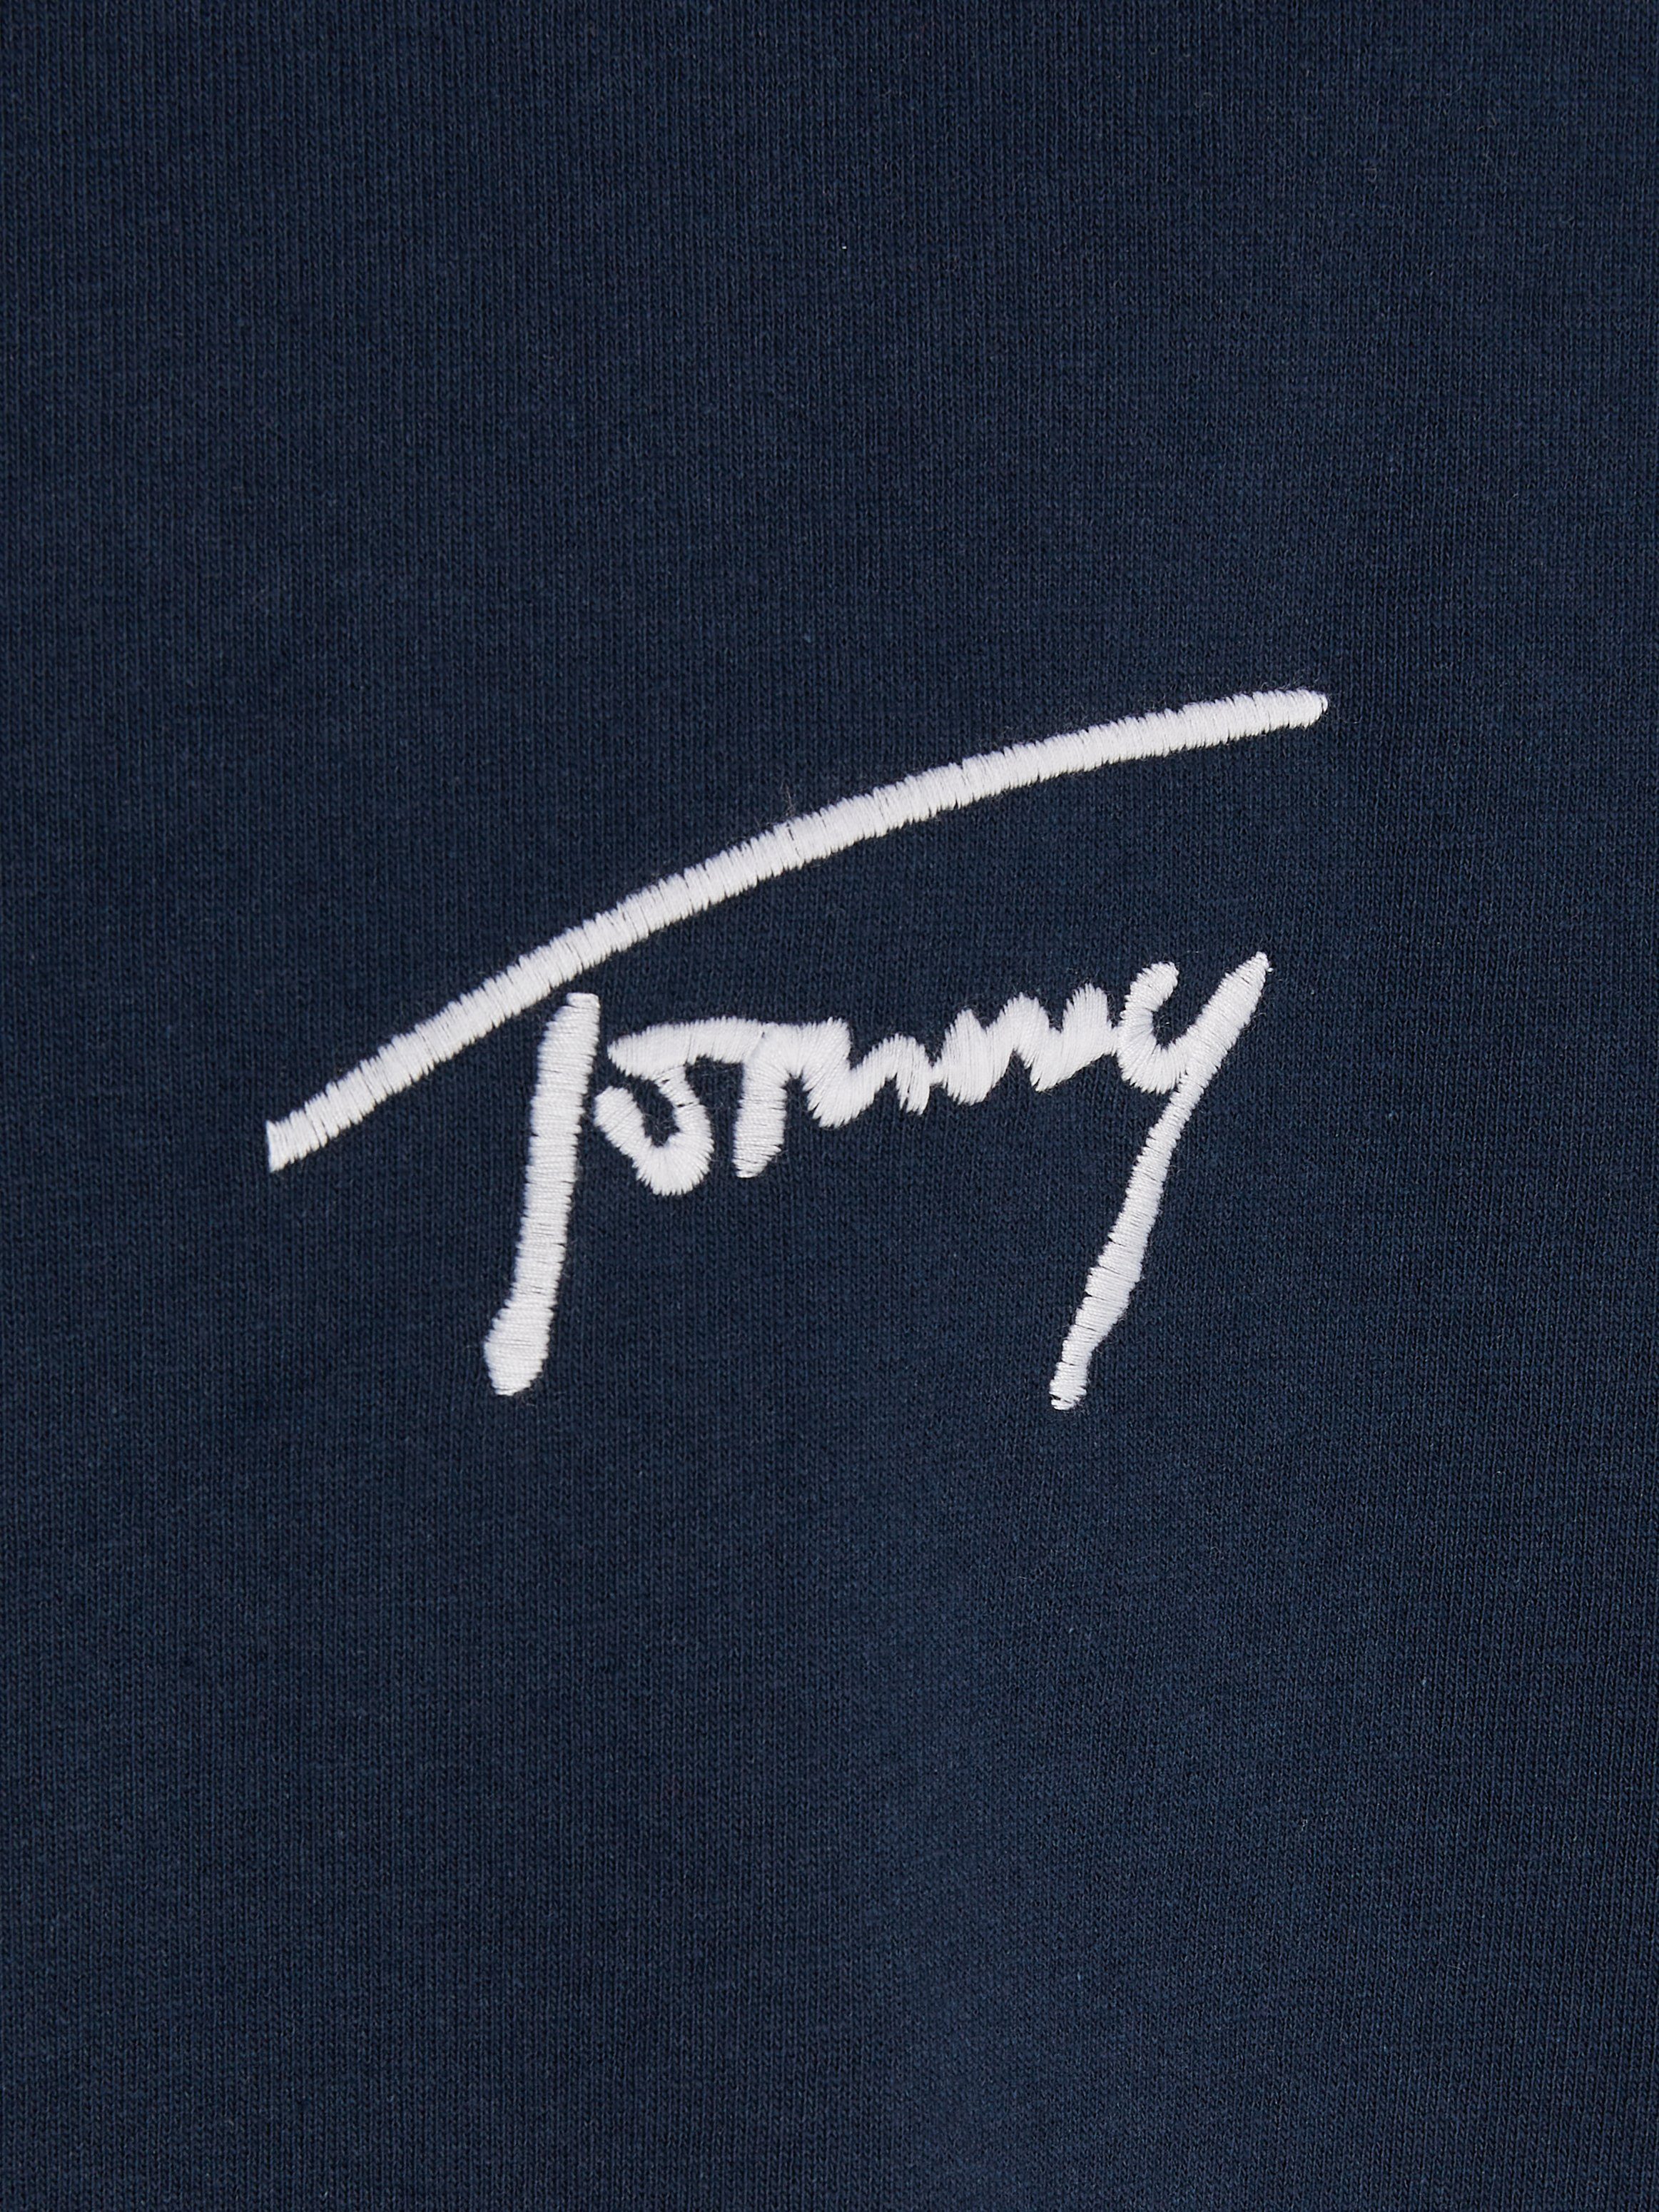 Tommy Jeans Logostickerei T-Shirt EXT TJM TEE Navy mit Dark REG Night SIGNATURE